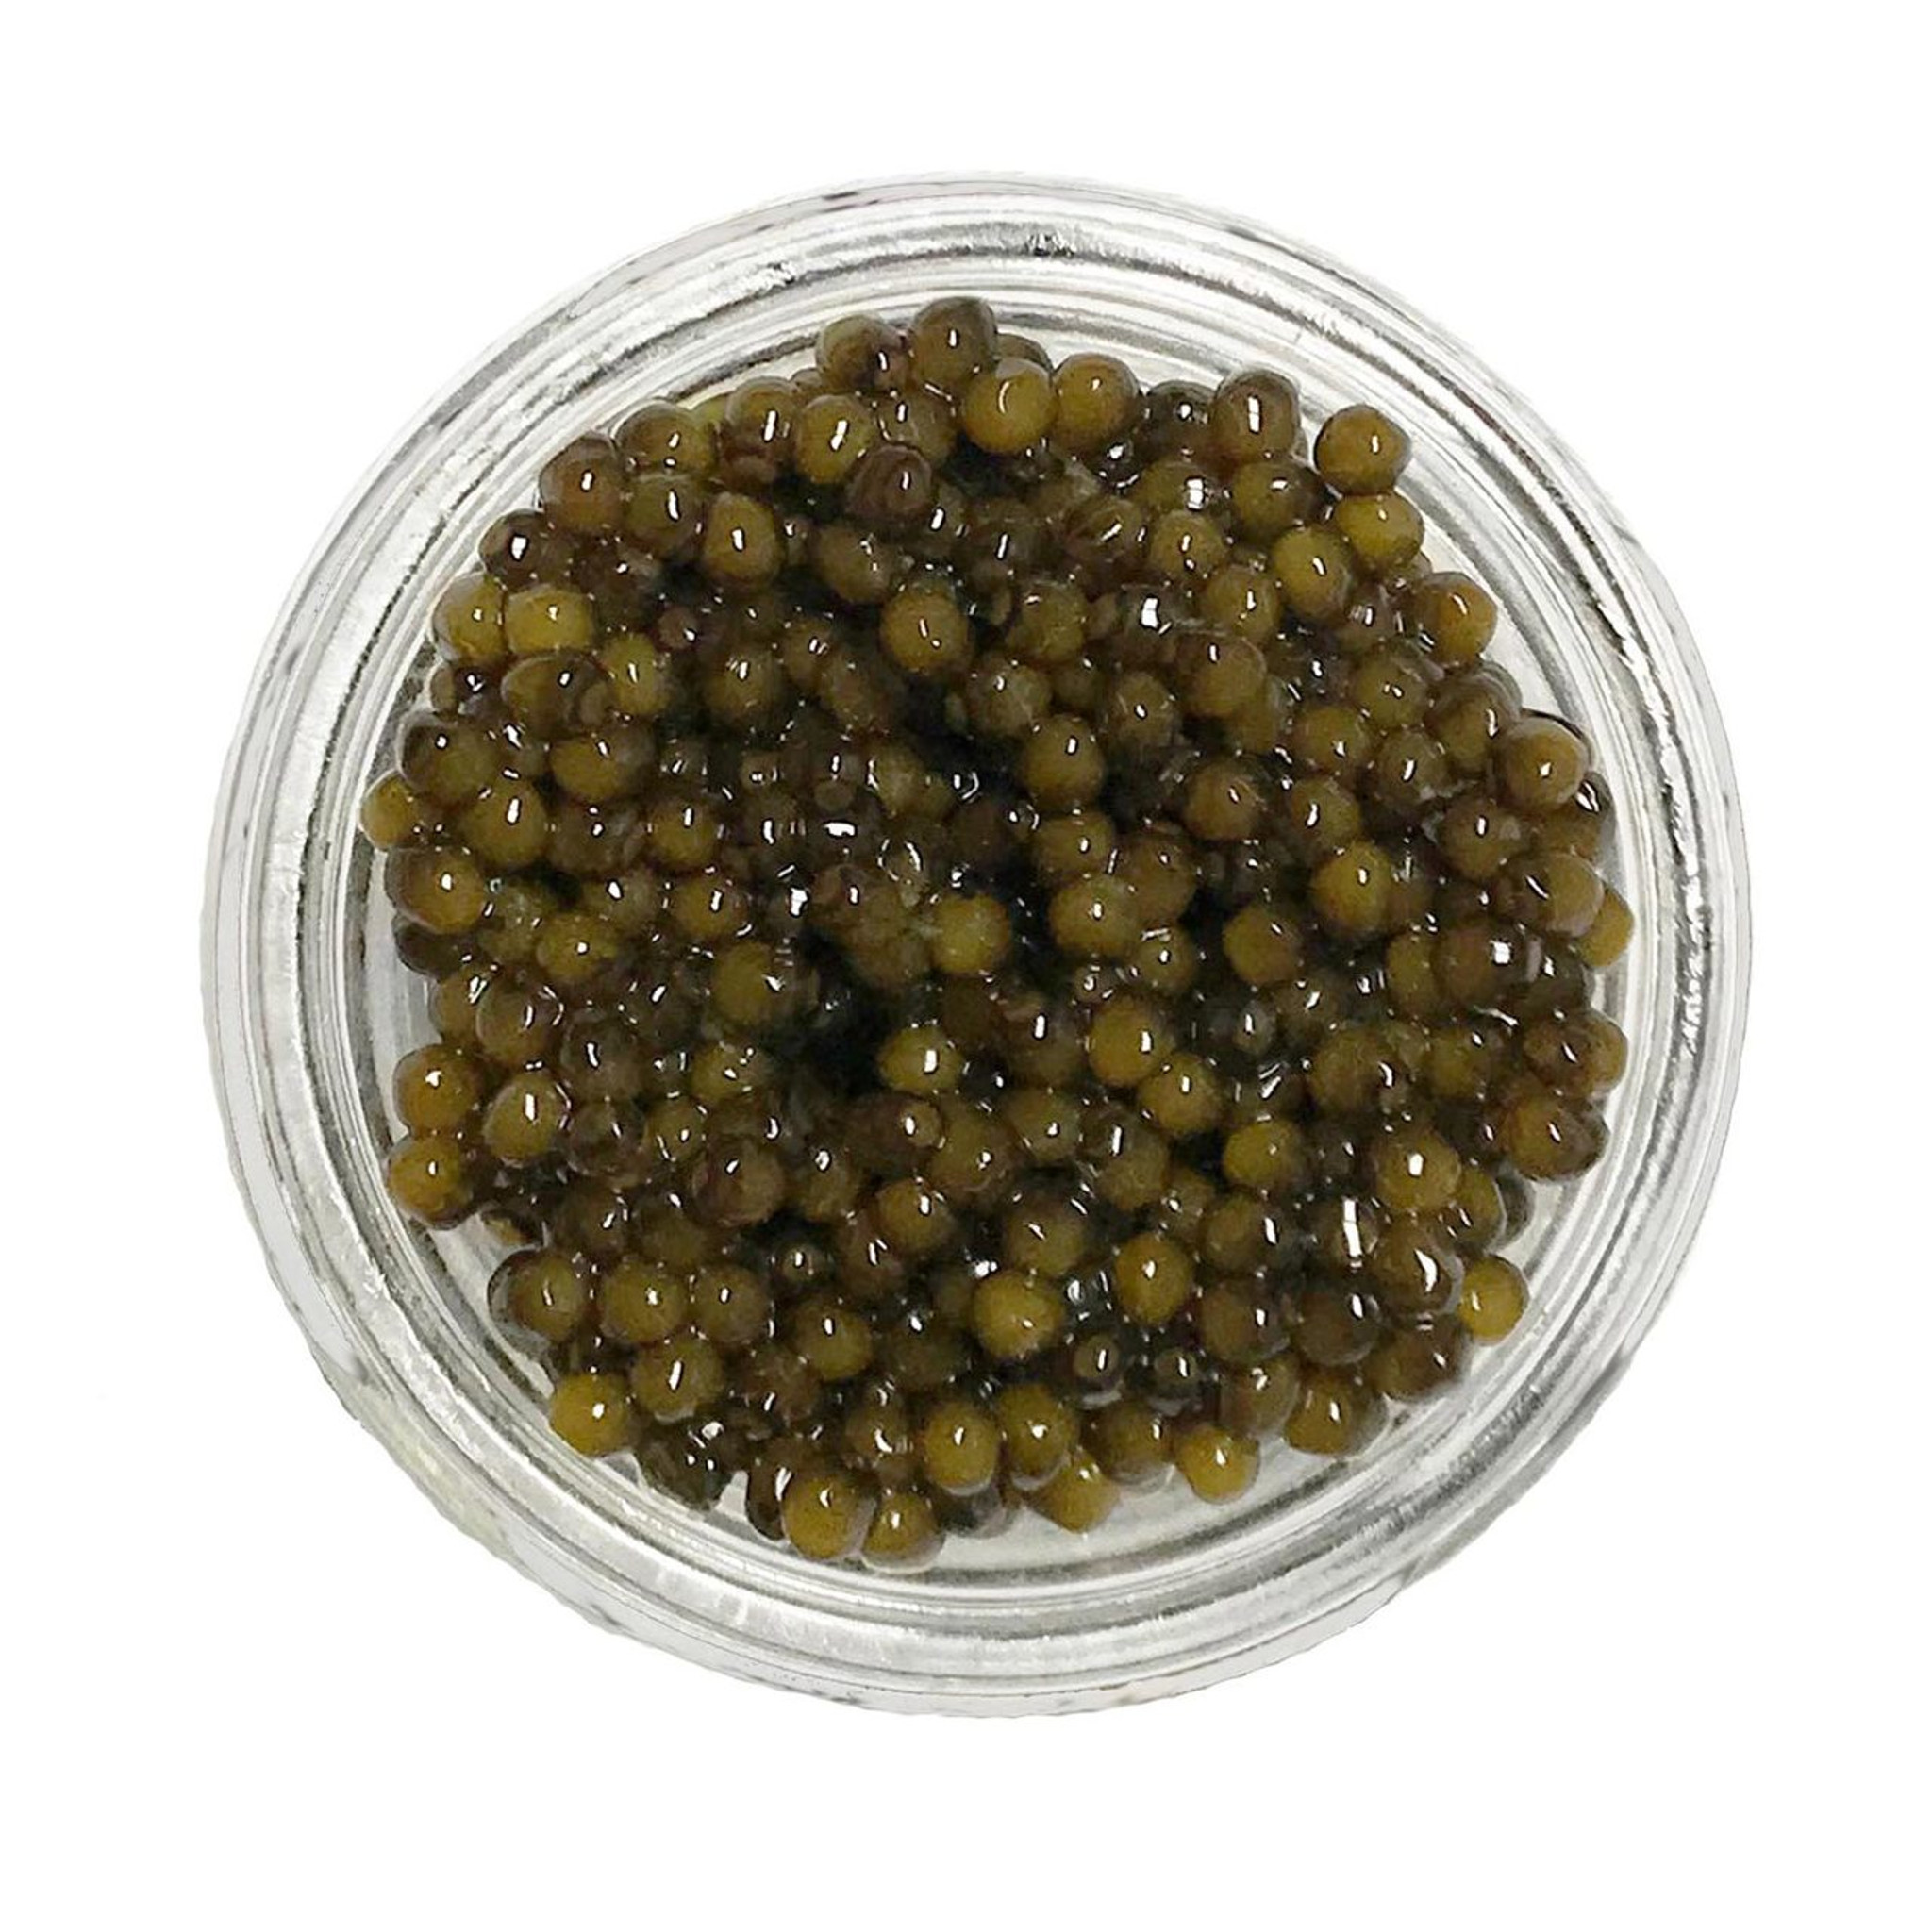 Royal Beluga Bester Hybrid - Caviar Star